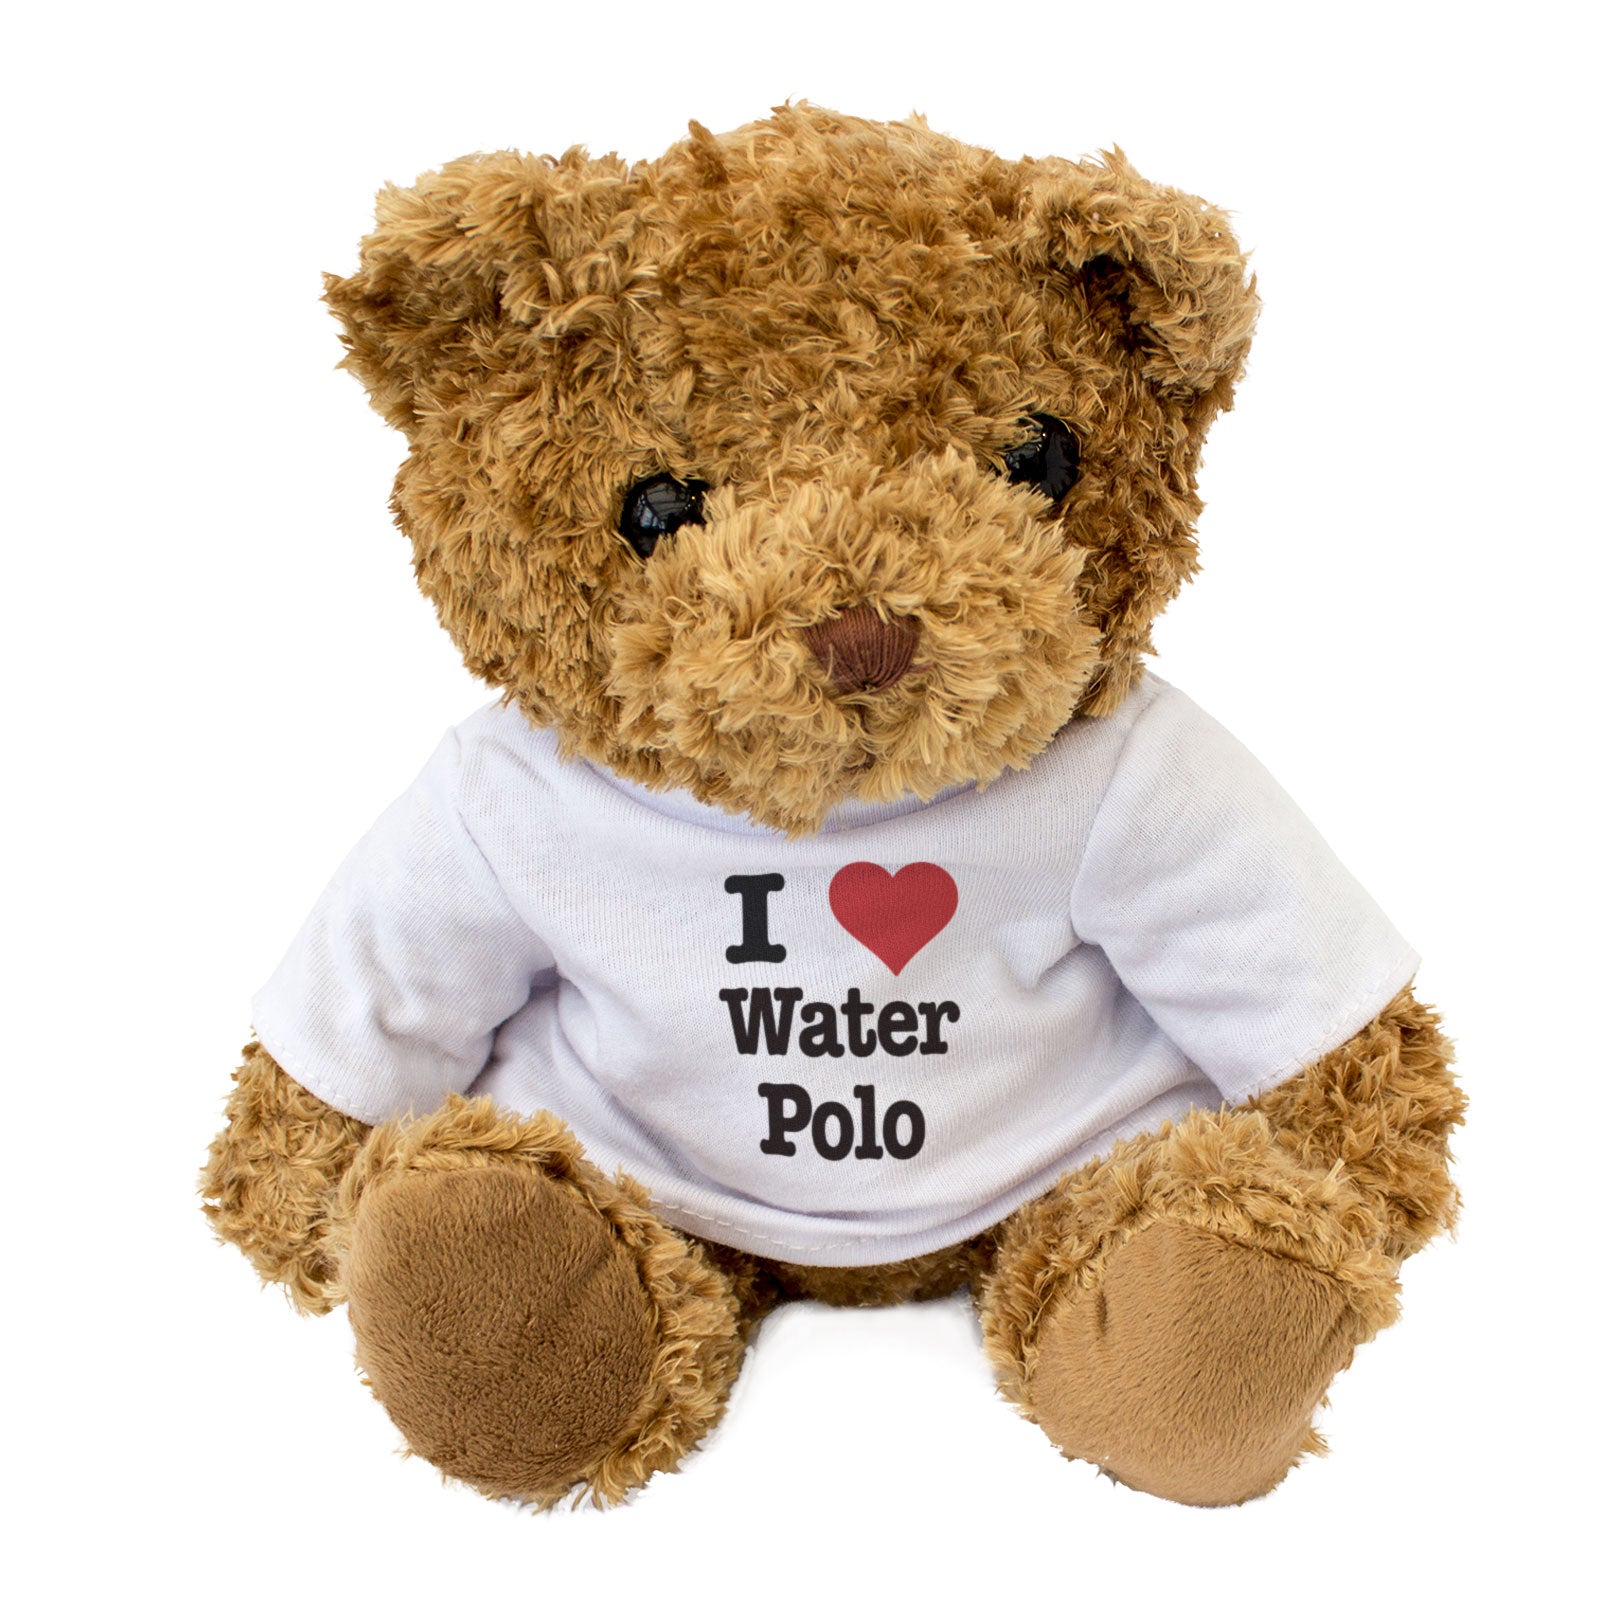 I Love Water Polo - Teddy Bear